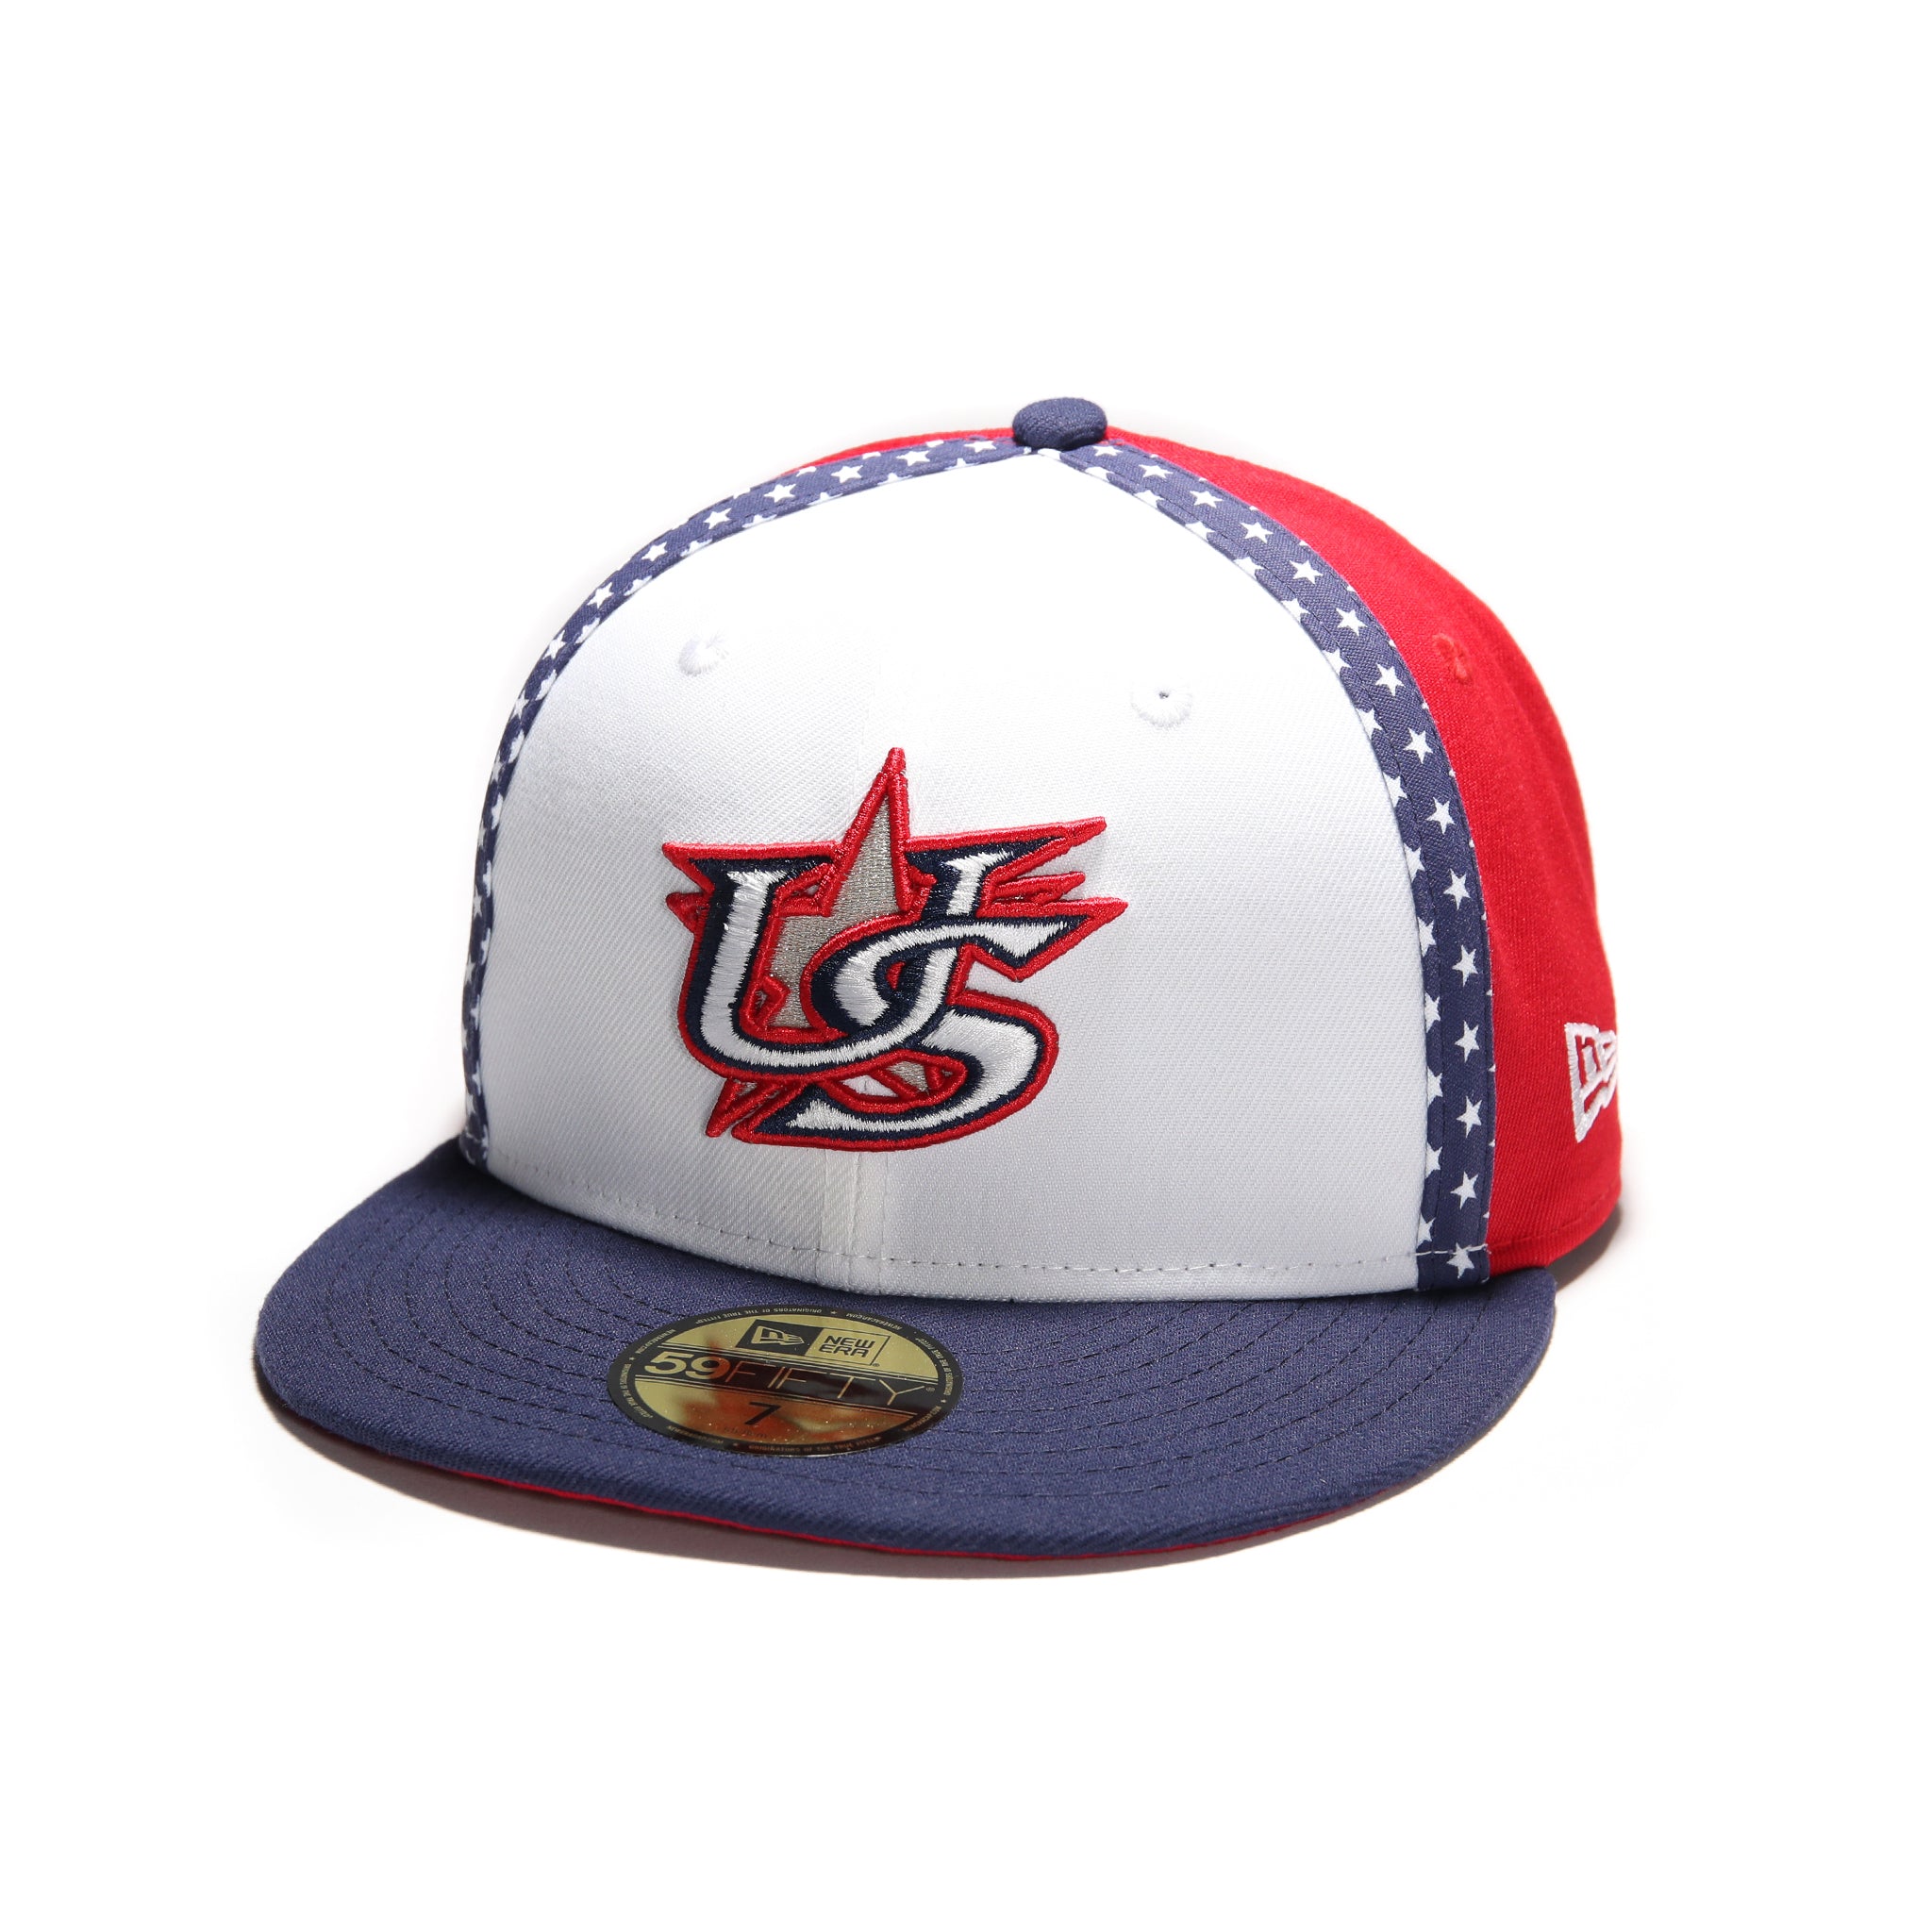 Team Liberty 59fifty Usa Baseball Shop